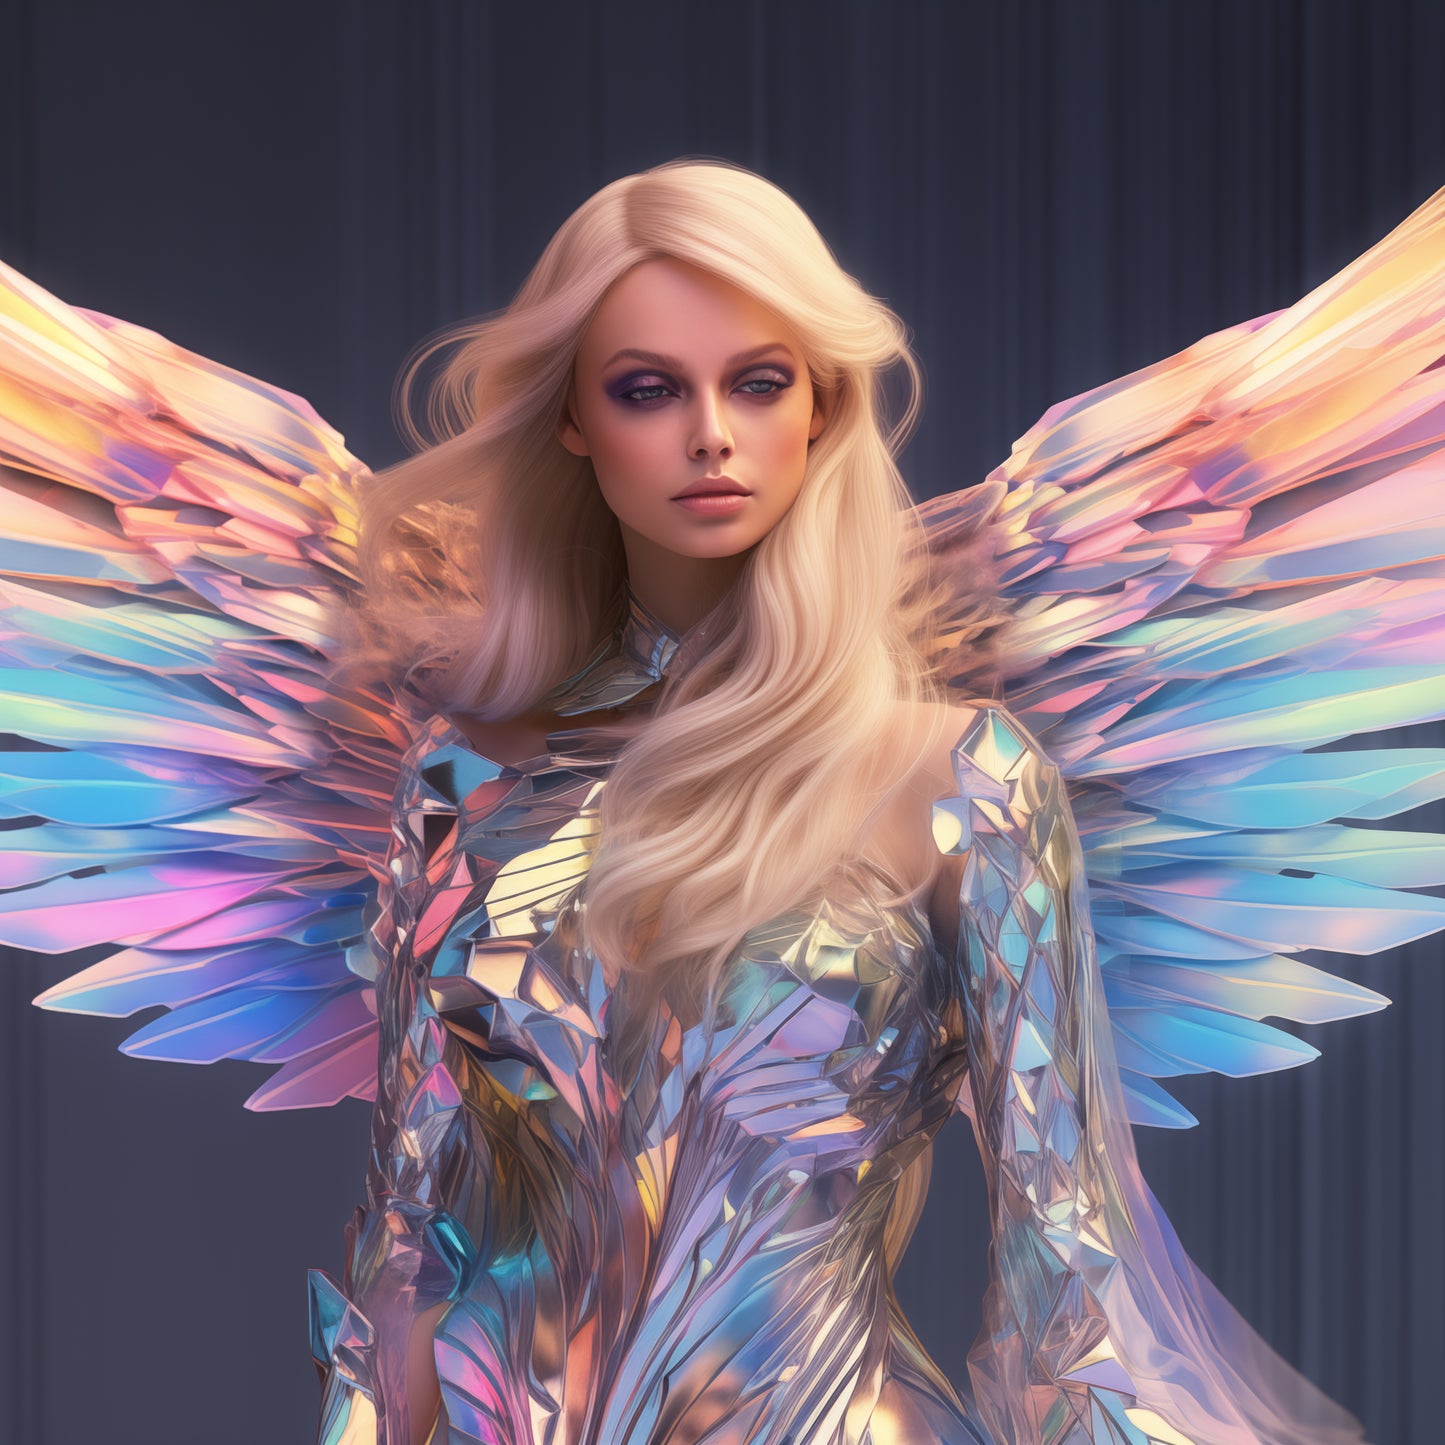 The Pastel Prism Angel - Art Print